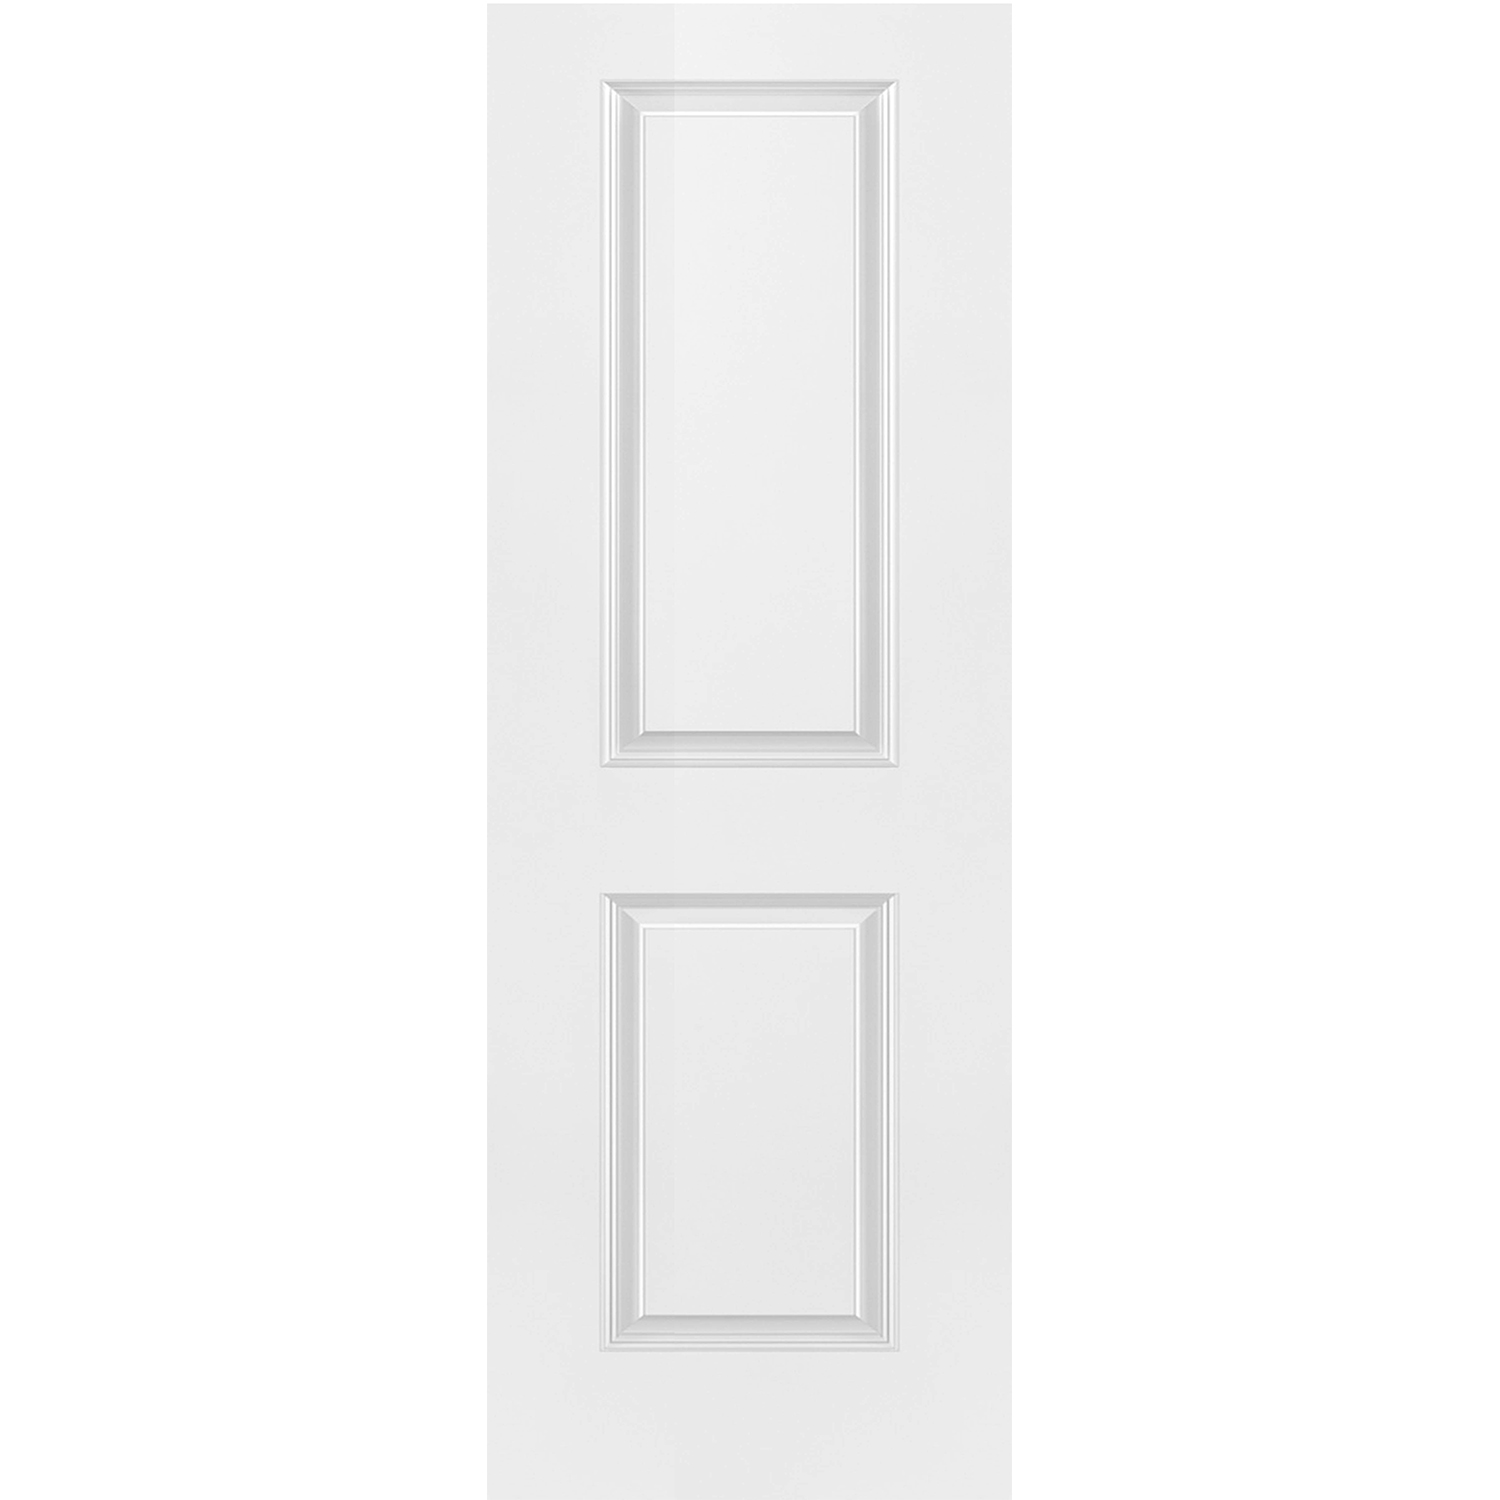 2 Panel 80 x 28 x 1-3/8 Smooth Hollow Door Raised